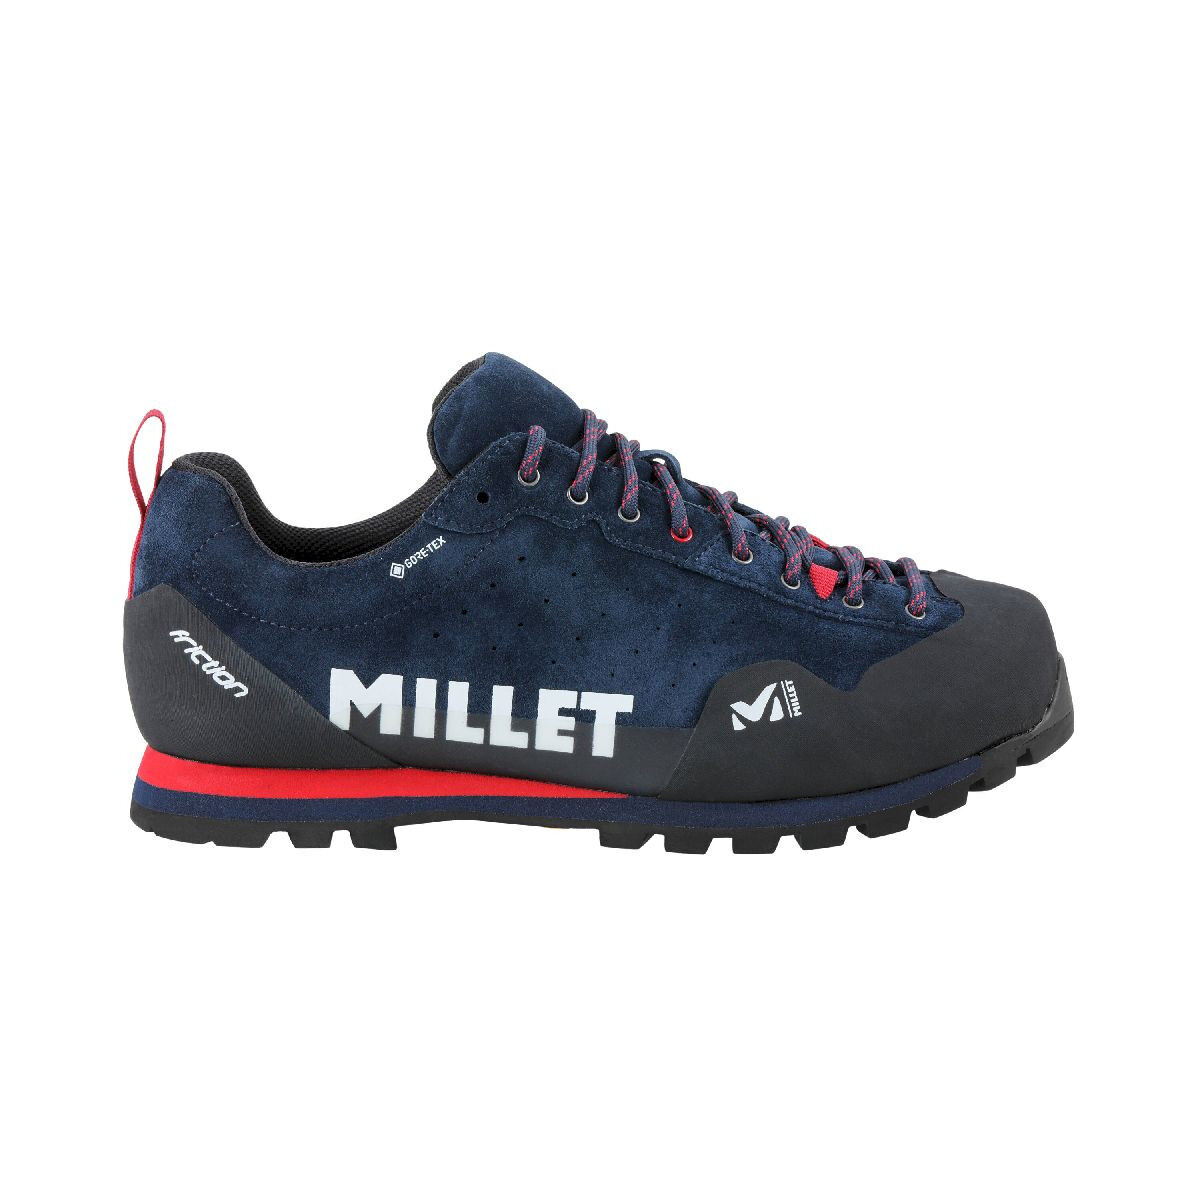 Millet Friction GTX U - Approach shoes